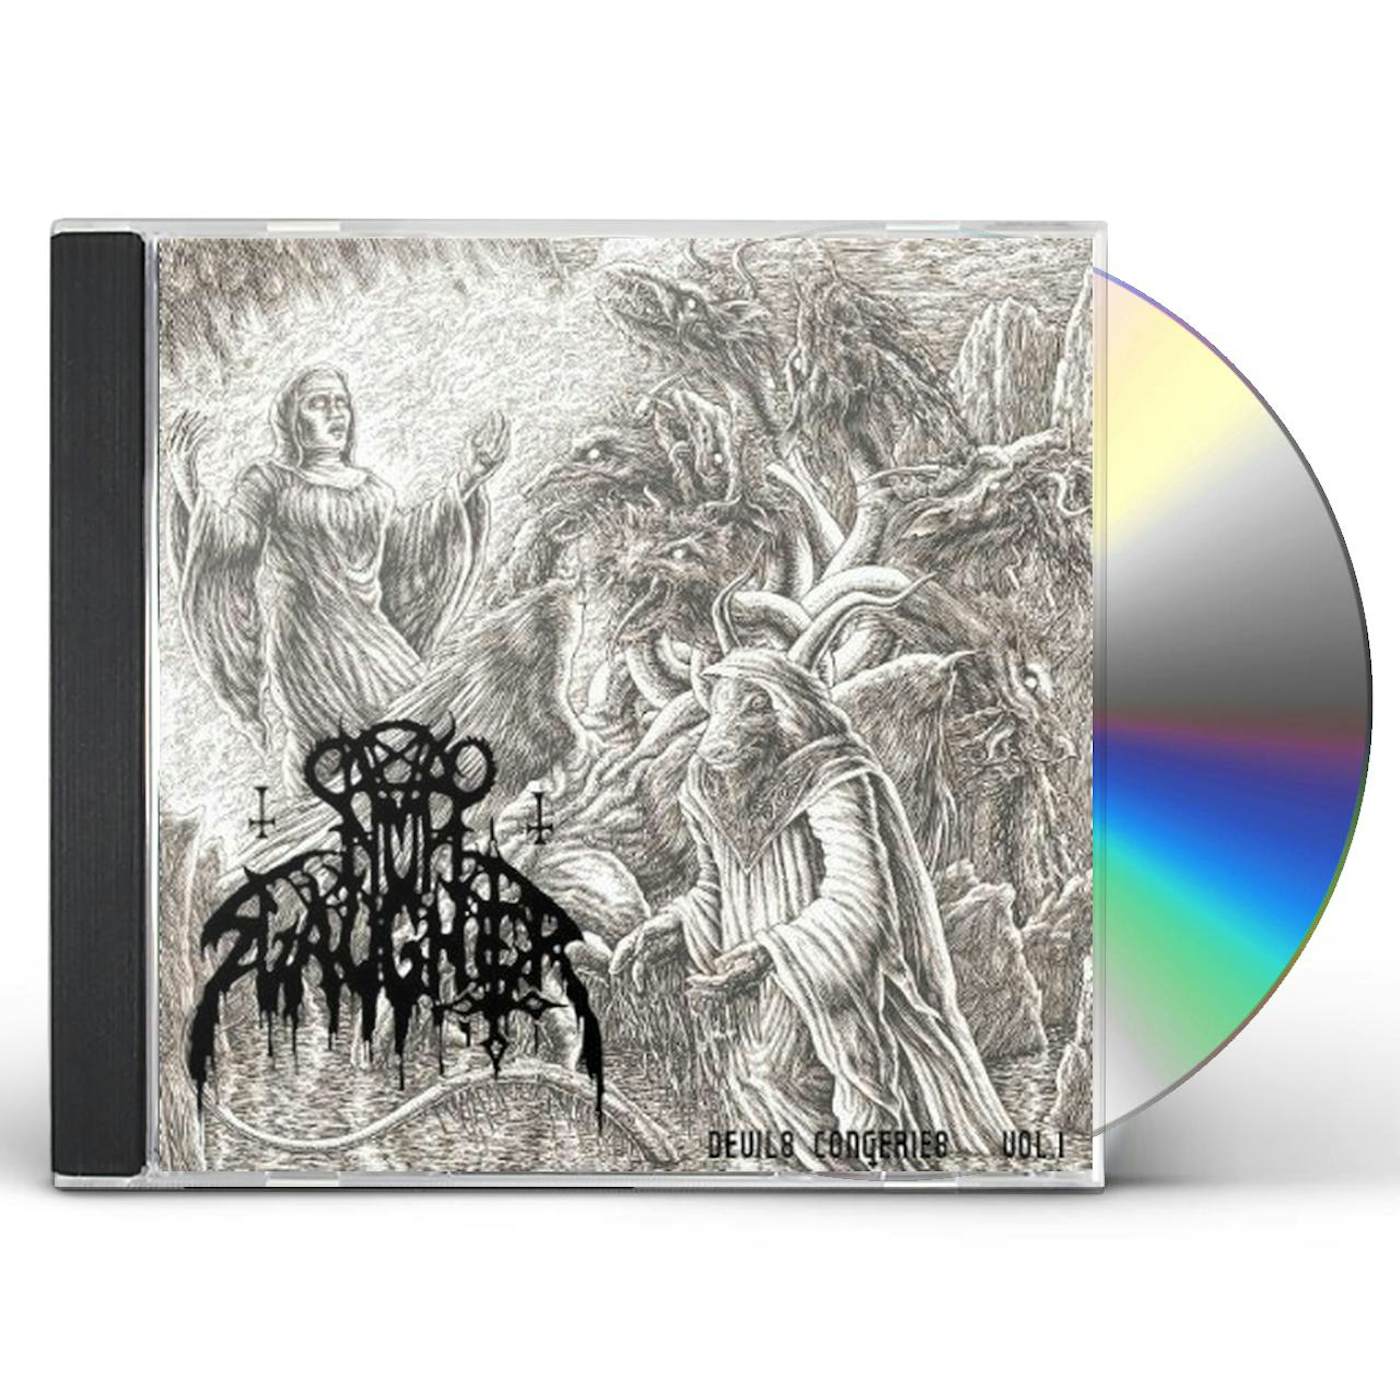 Nunslaughter DEVIL'S CONGERIES 1 CD